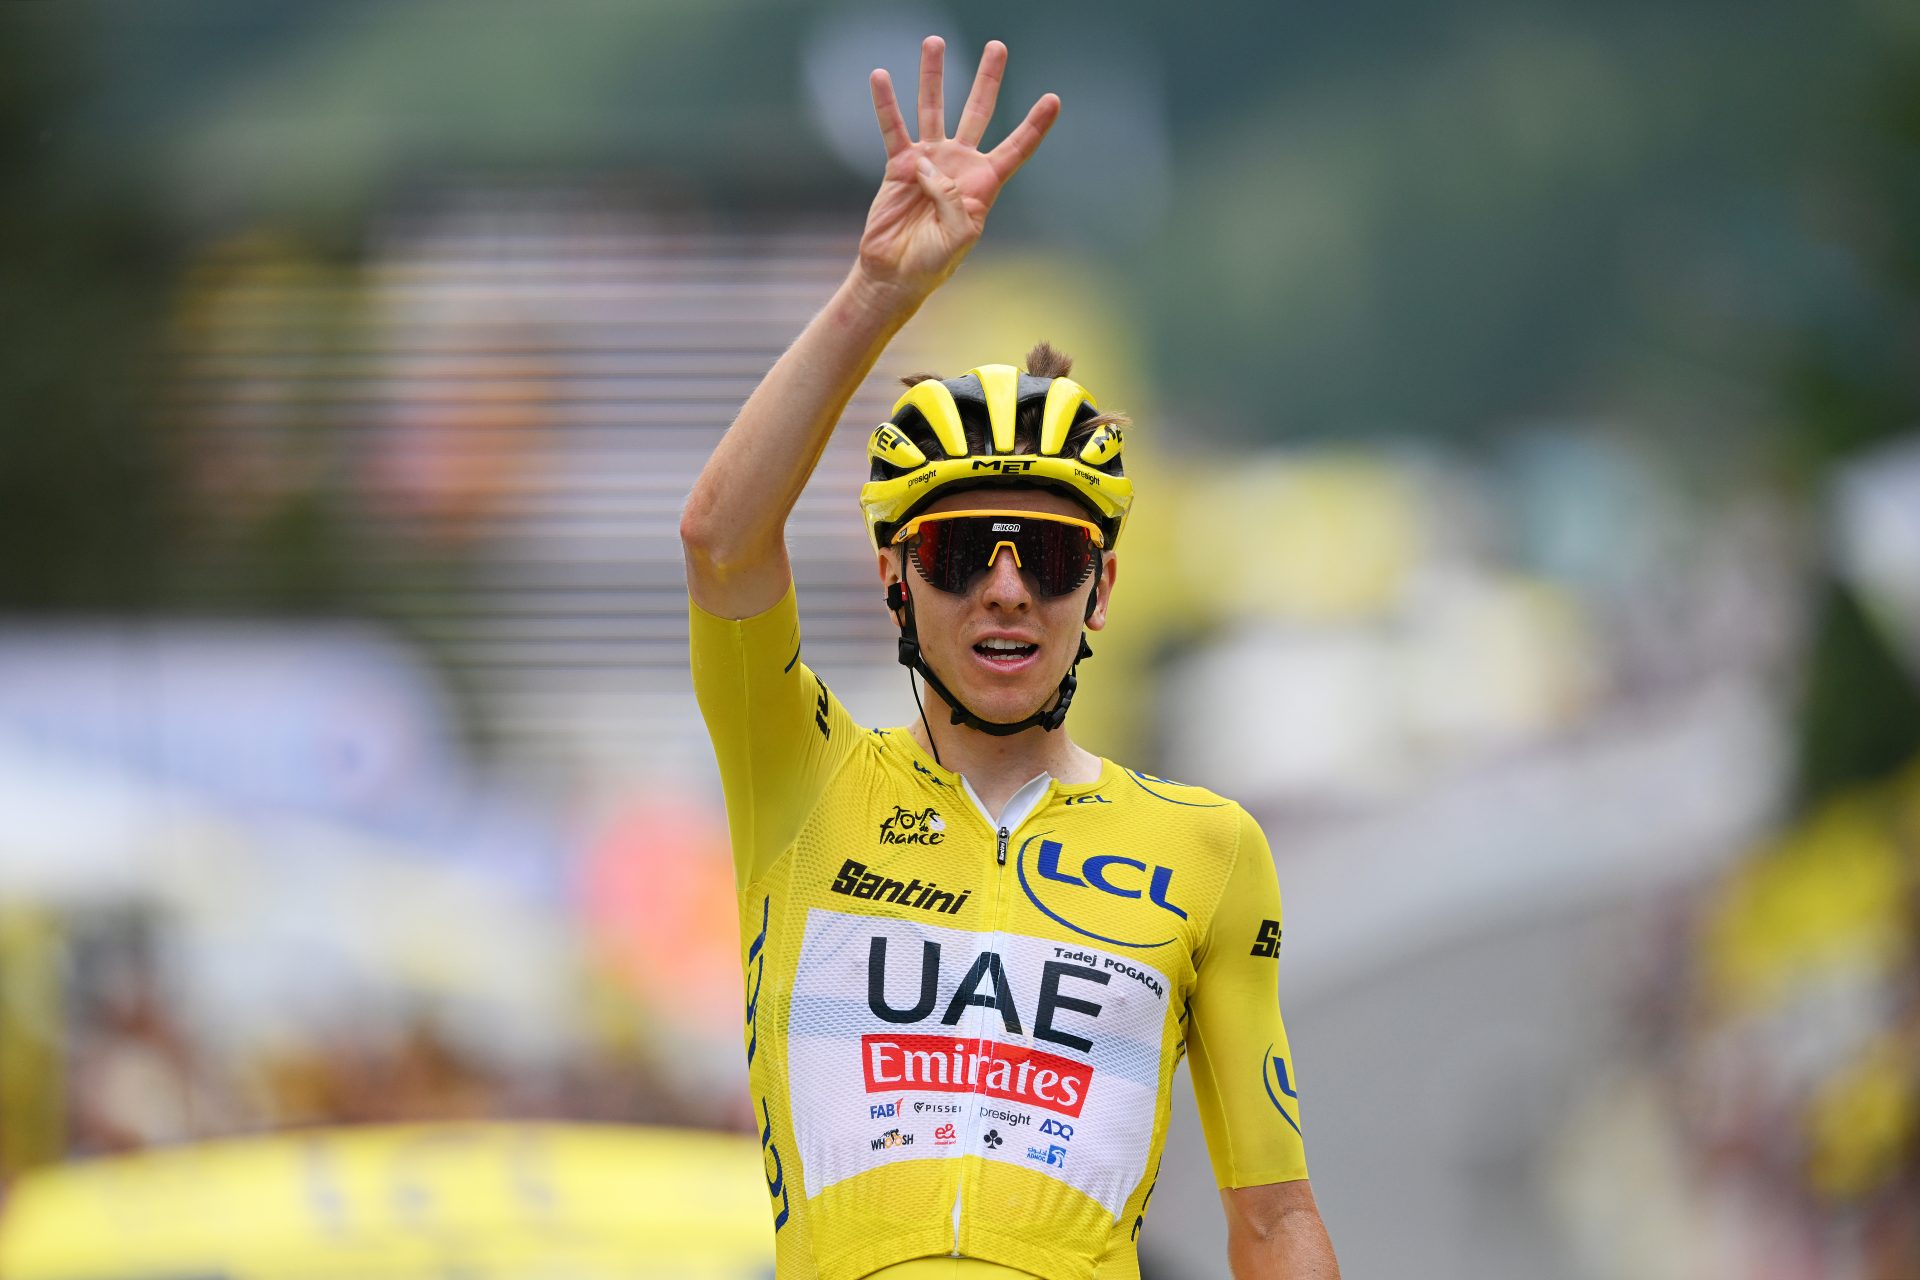 Tadej Pogacar takes his third victory: The last 20 winners of the Tour de France GC